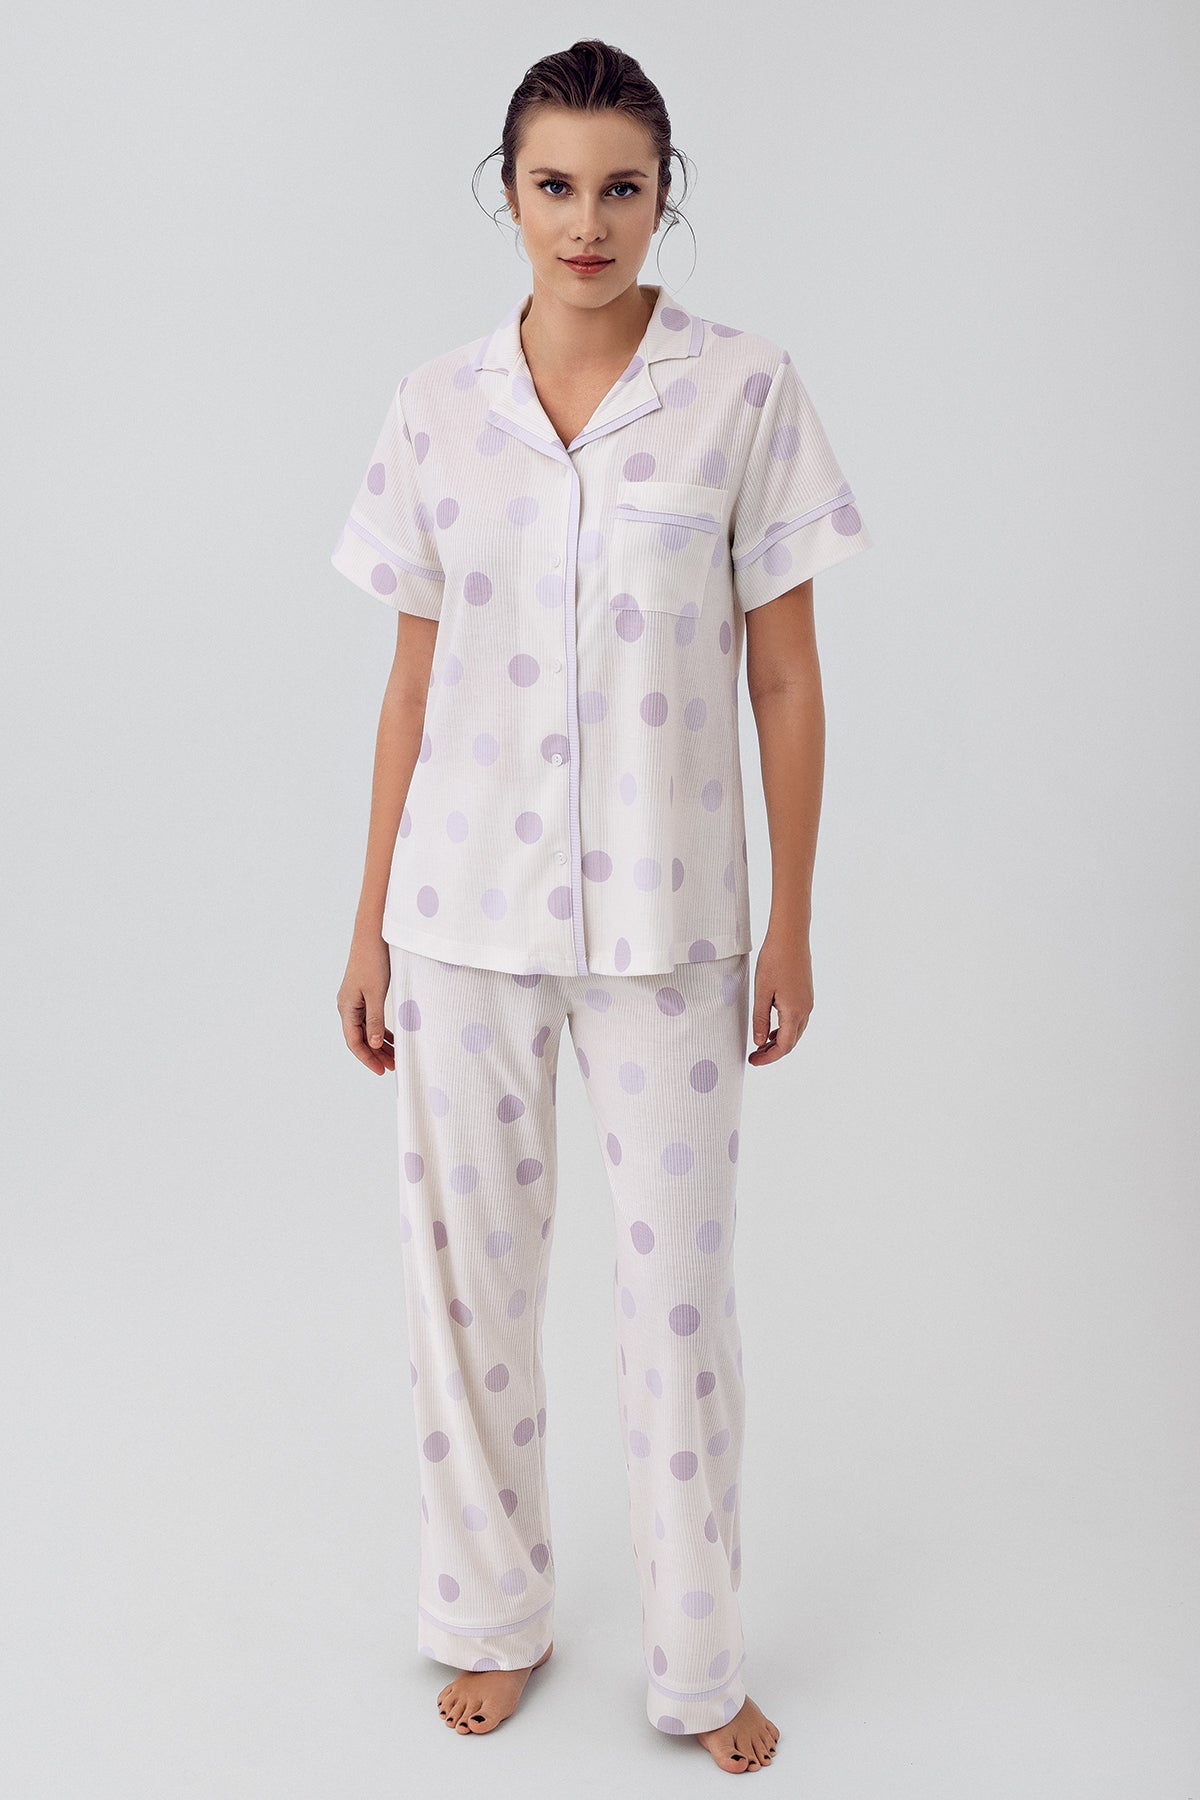 Shopymommy 16310 Polka Dot 3-Pieces Maternity & Nursing Pajamas With Robe Lilac